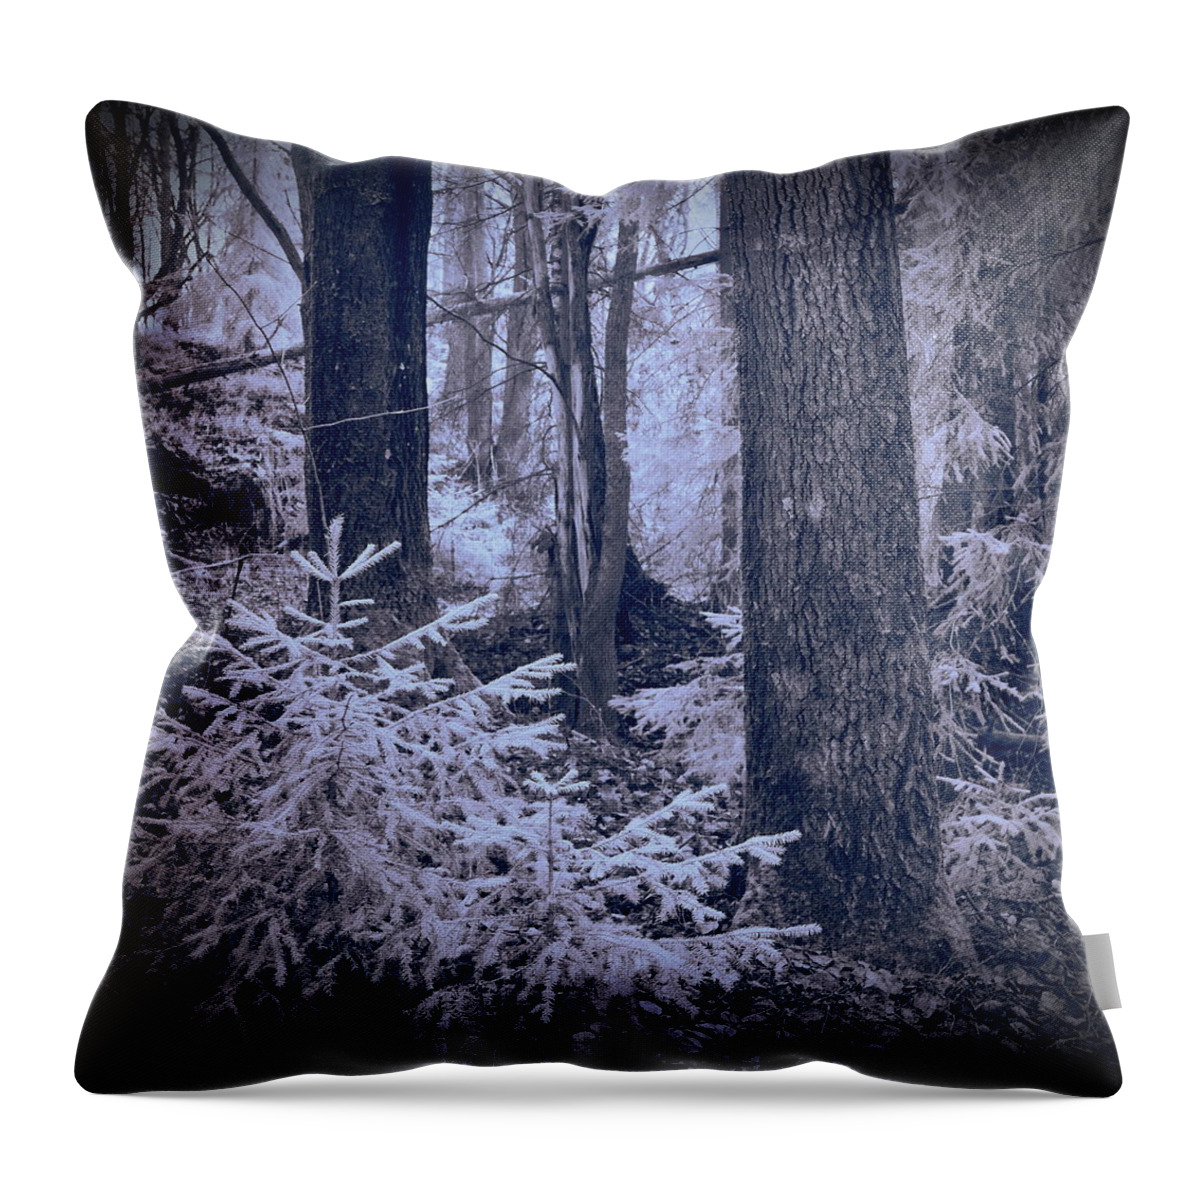 Jouko Lehto Throw Pillow featuring the photograph Fairy forest. Infrared by Jouko Lehto